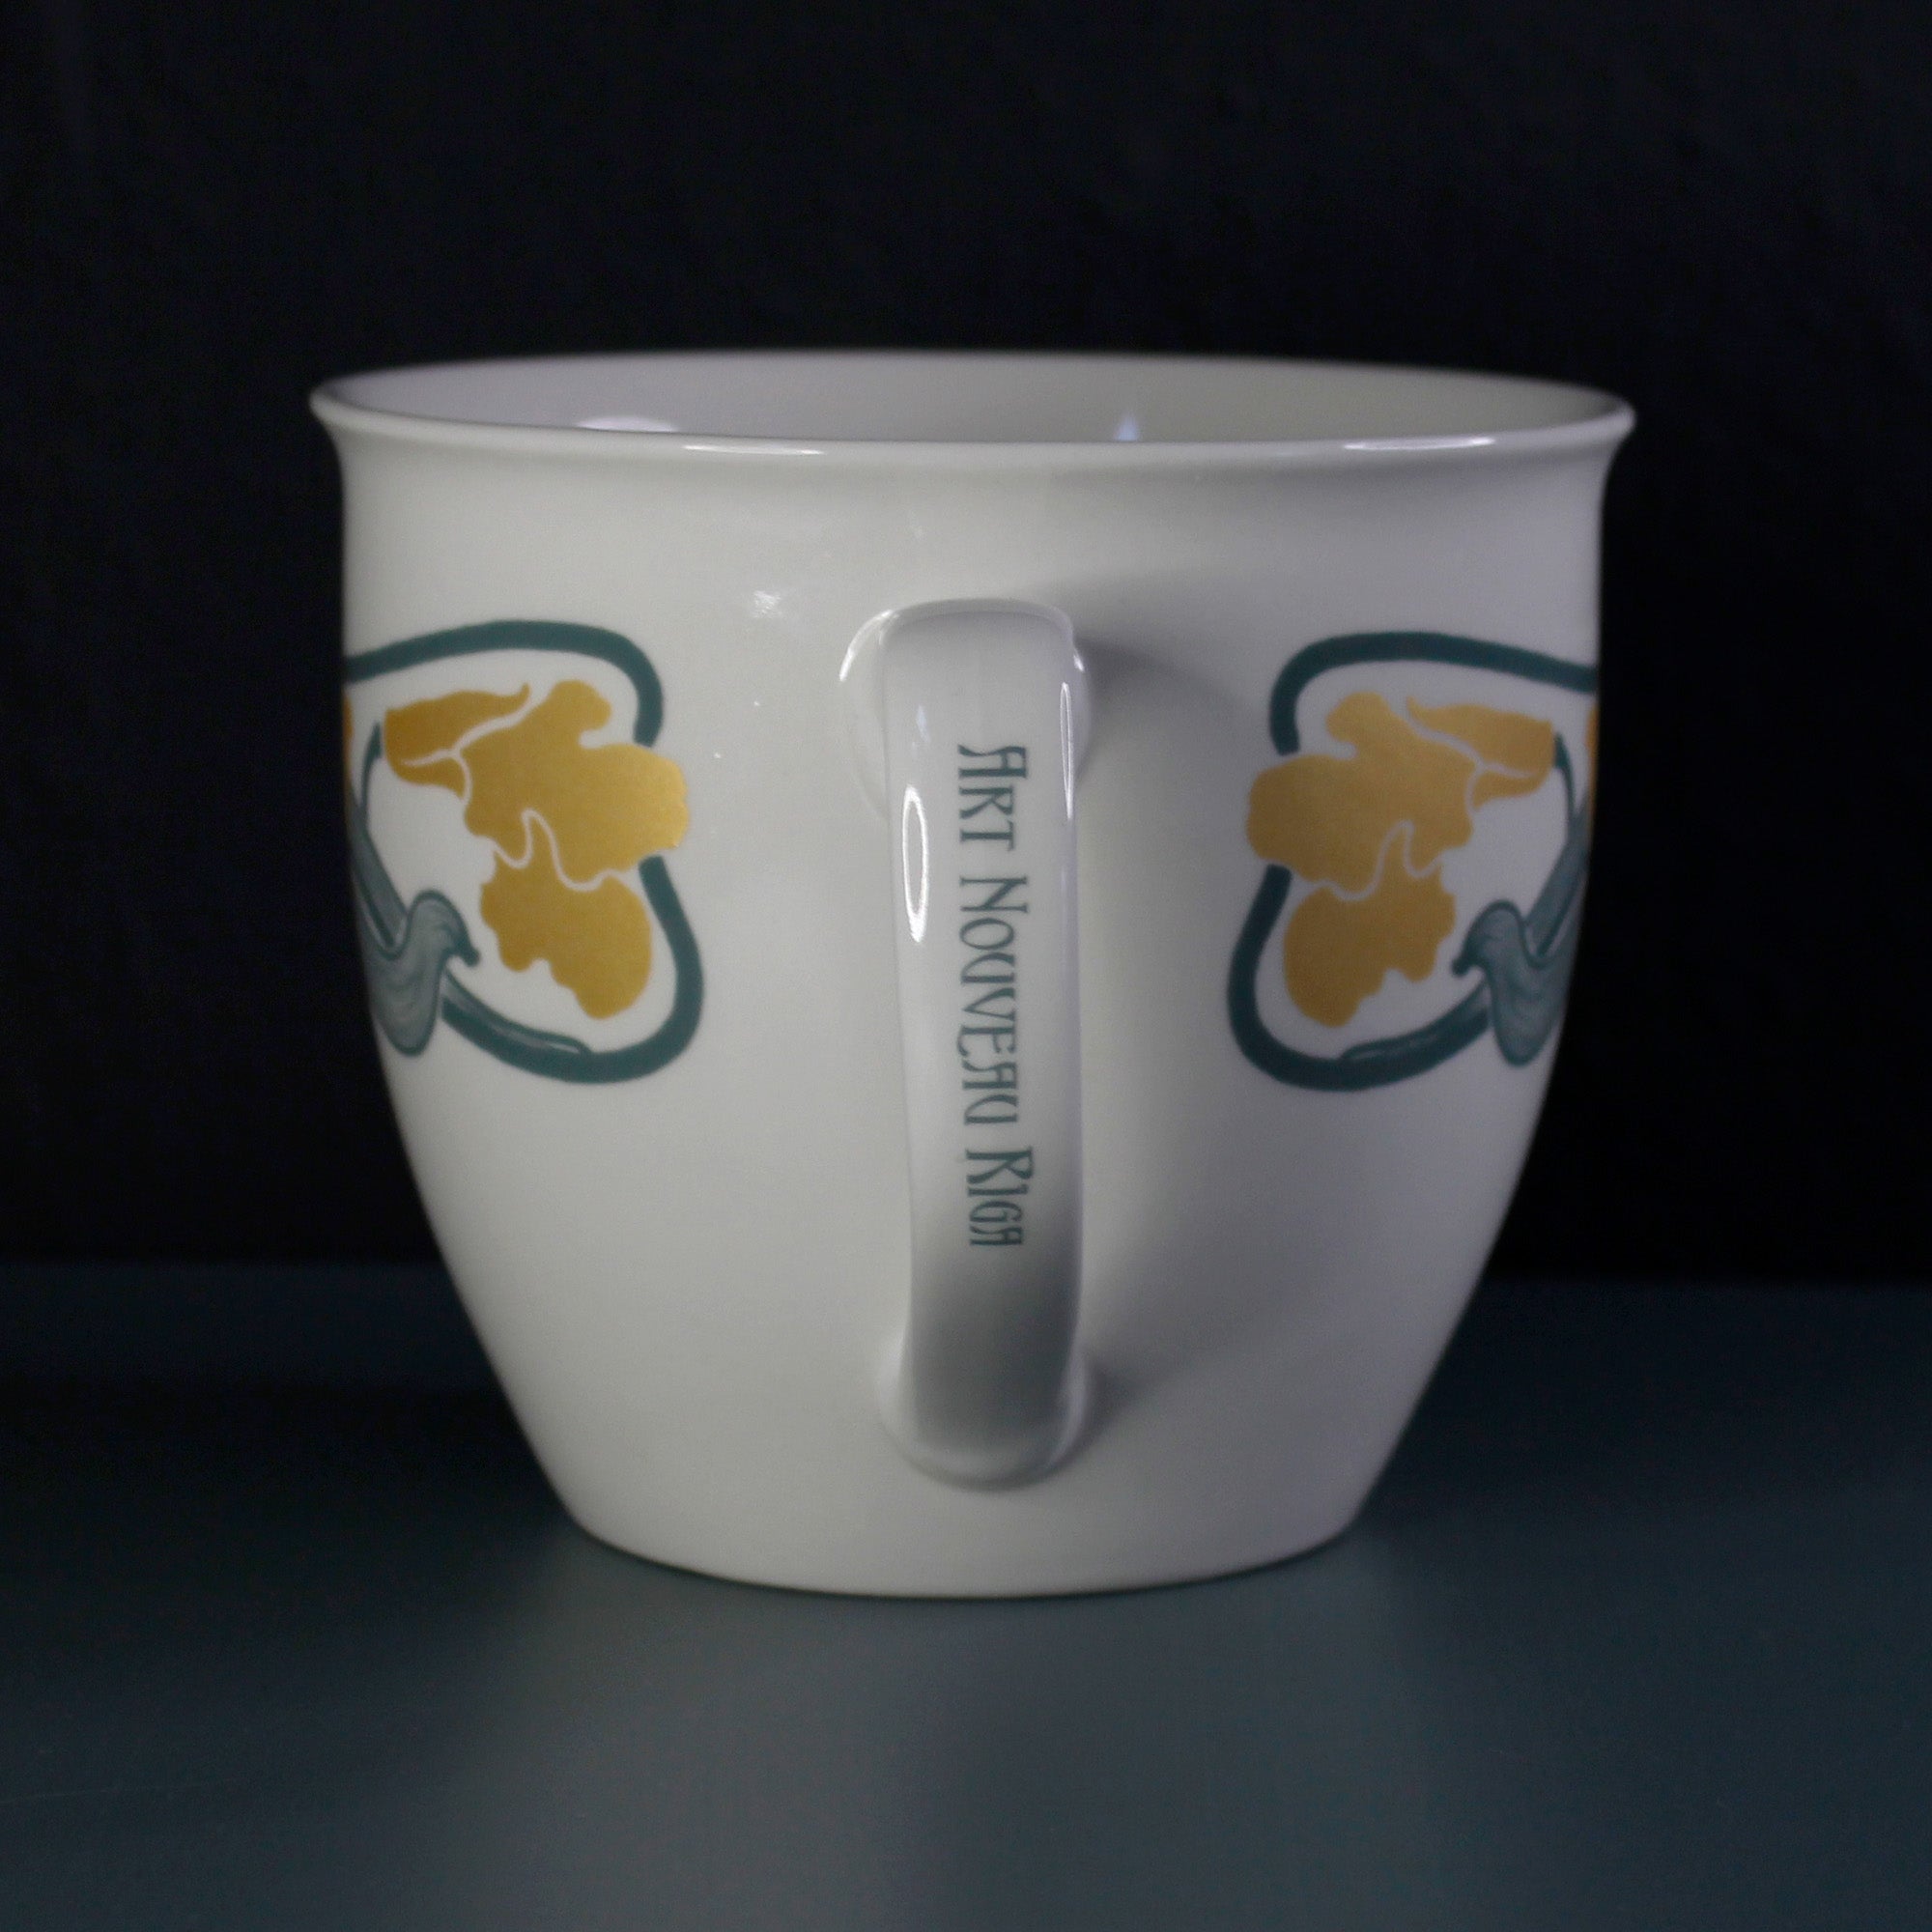 Porcelain mug - Iris